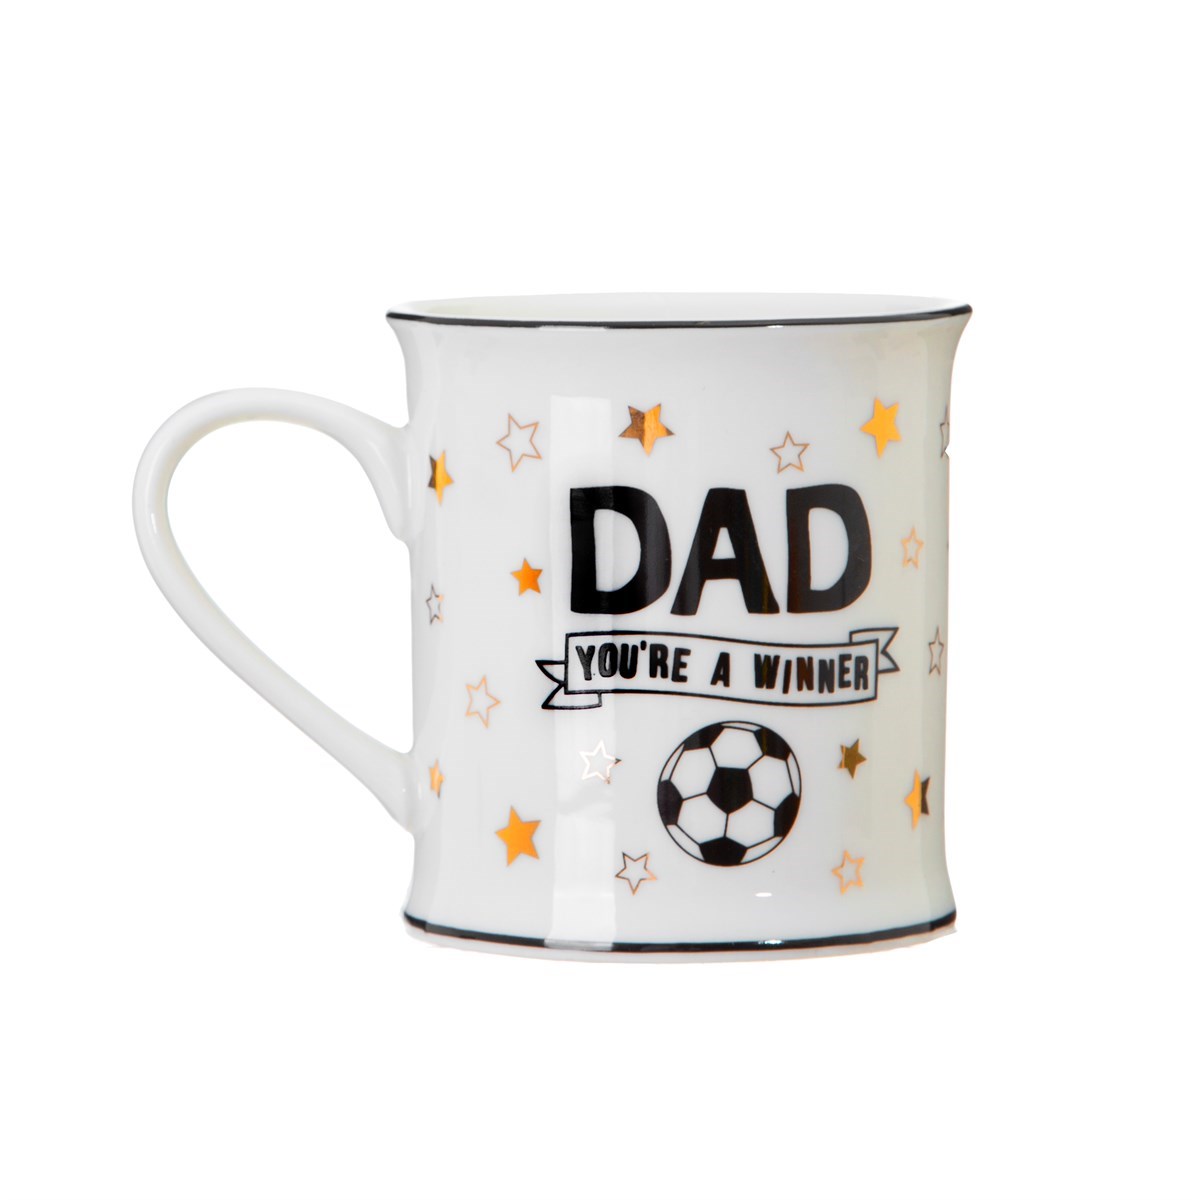 Dad You’re a Winner Mug